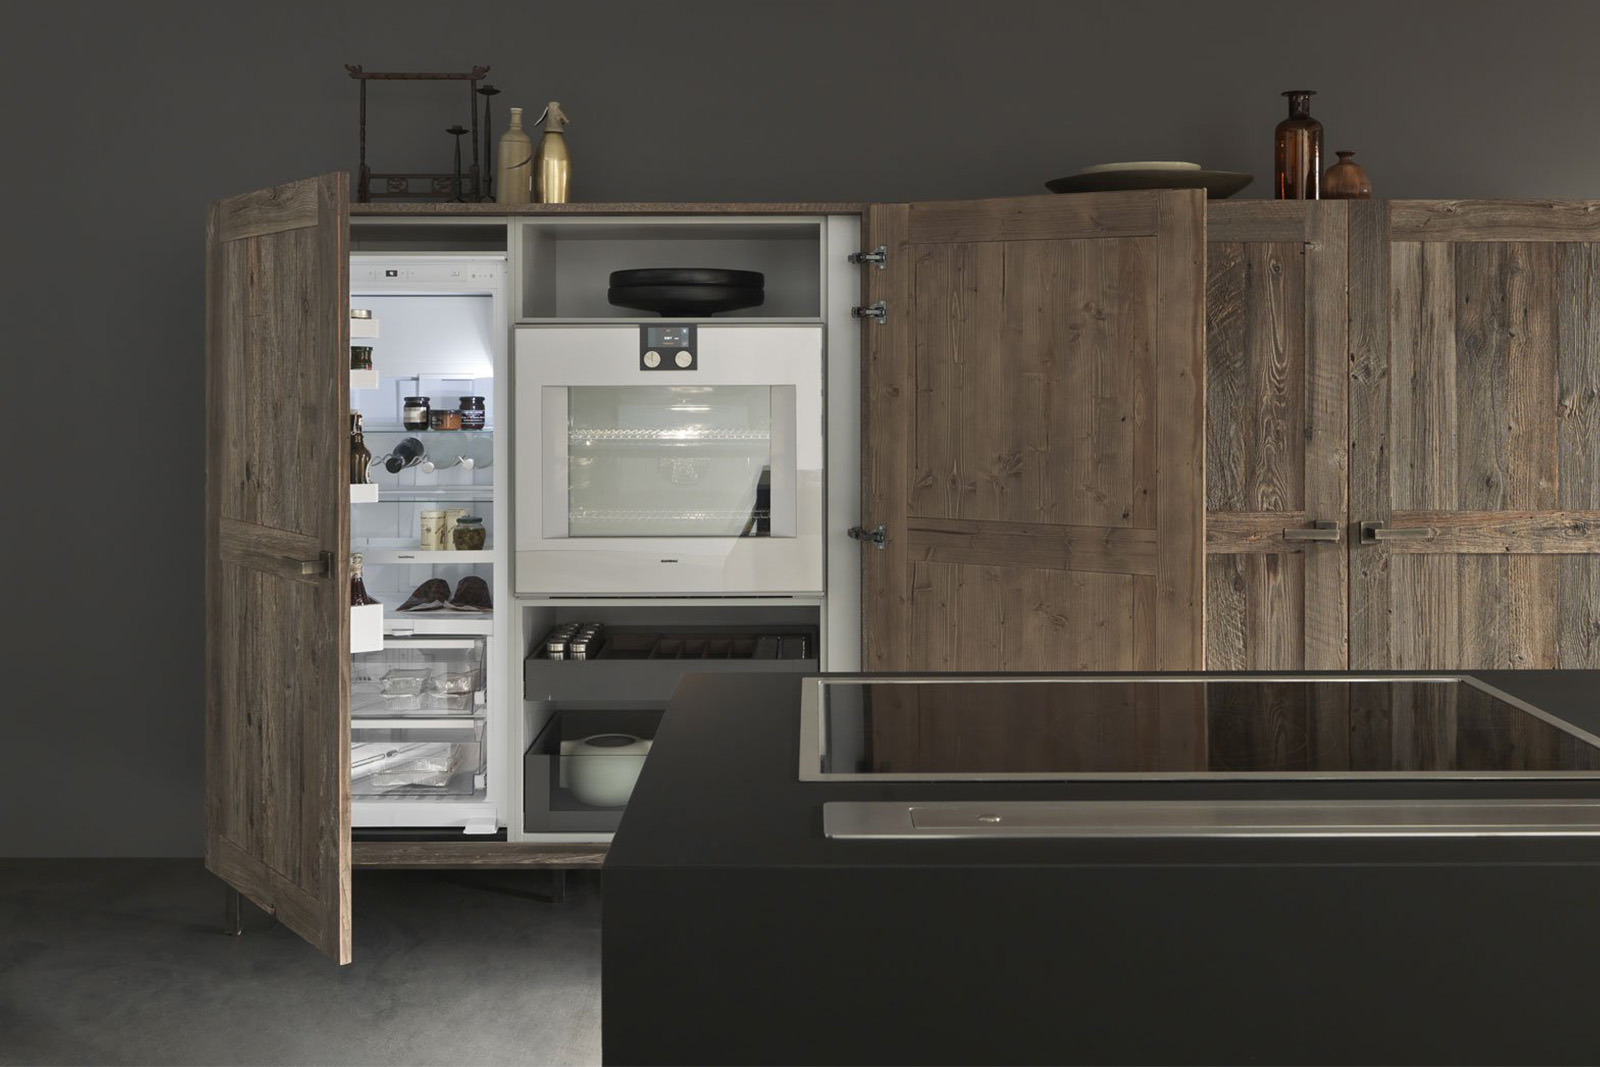 Opulent-style kitchen cabinets